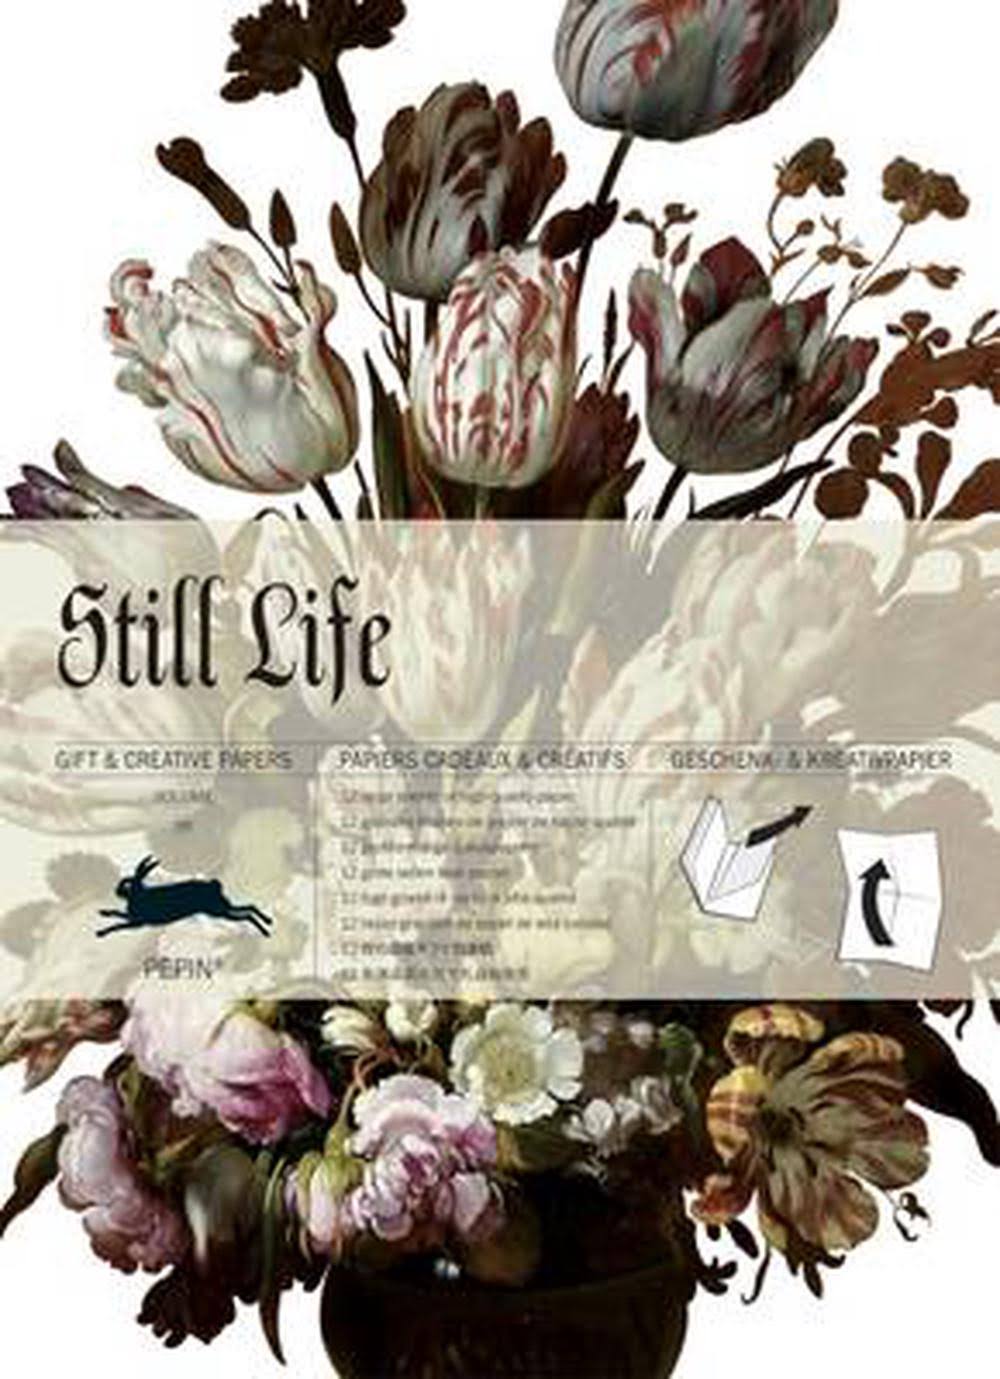 Still Life : Gift and Creative Paper Book, Volume 59 - Pepin Van Roojen